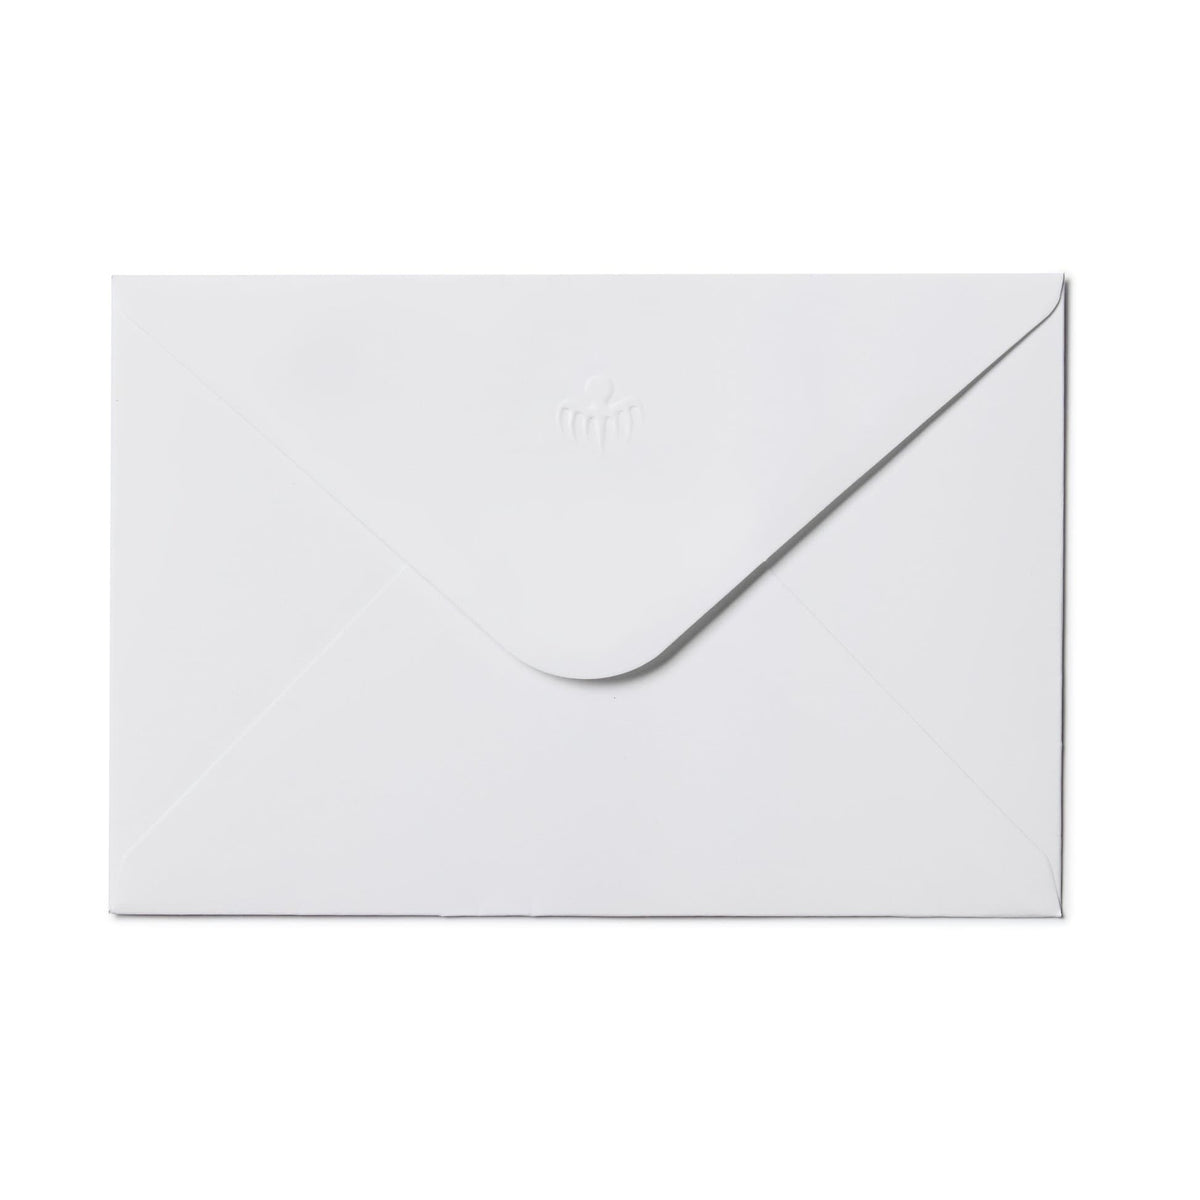 James Bond SPECTRE Symbol Notecard & Envelope Set | Official 007Store